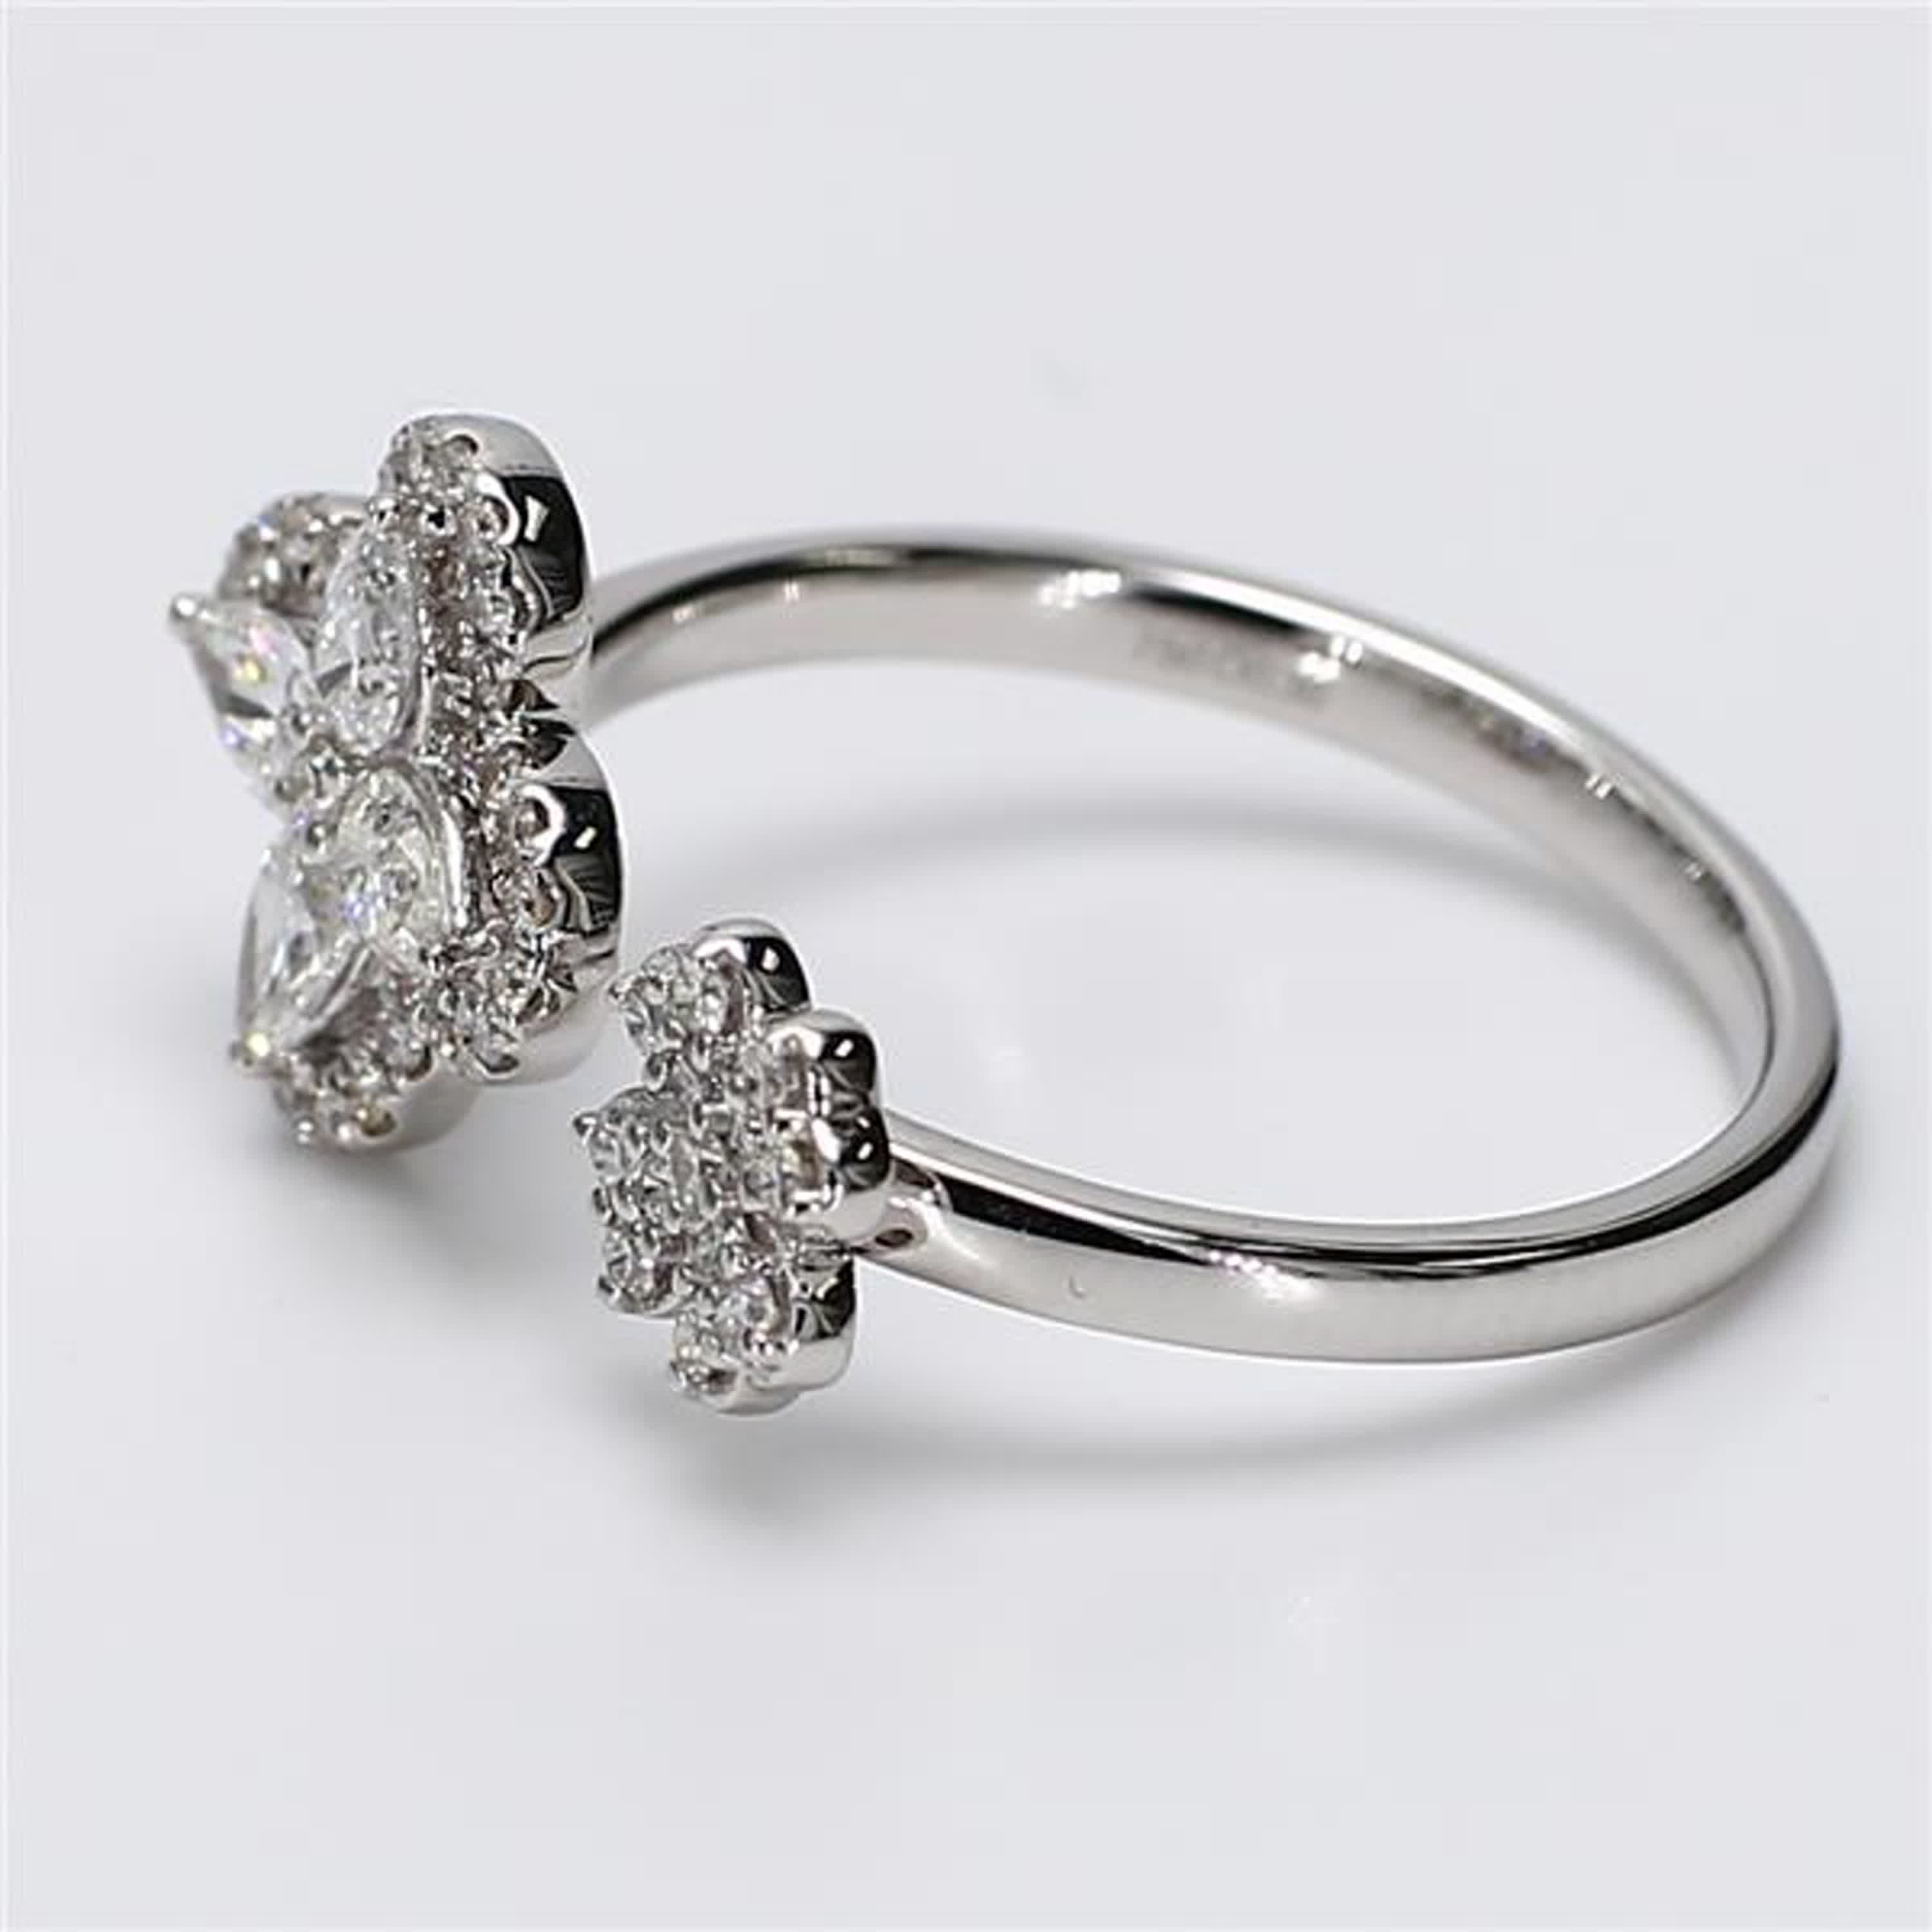 Natural White Pear and Round Diamond .60 Carat TW White Gold Fashion Ring